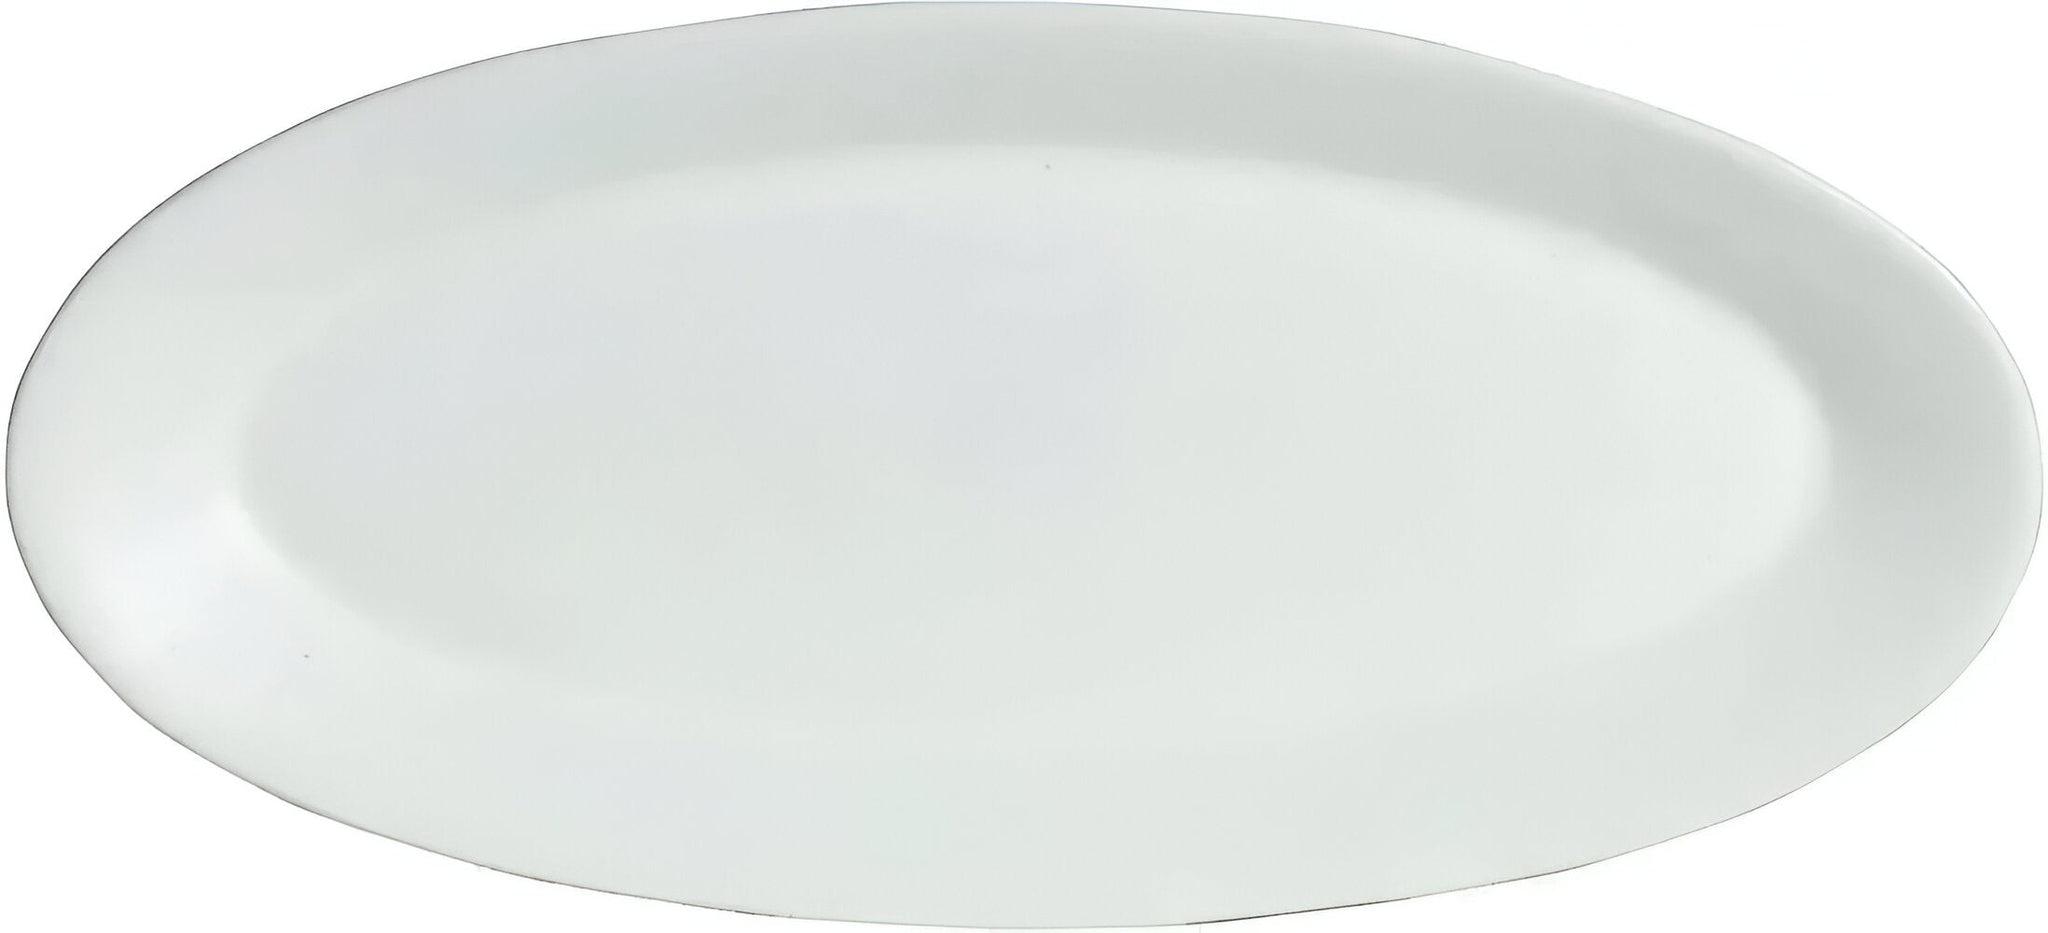 Bugambilia - Mod 67.6 Oz Medium White Oval Wide Oval Platter With Glossy Smooth Finish - PO023-MOD-WW